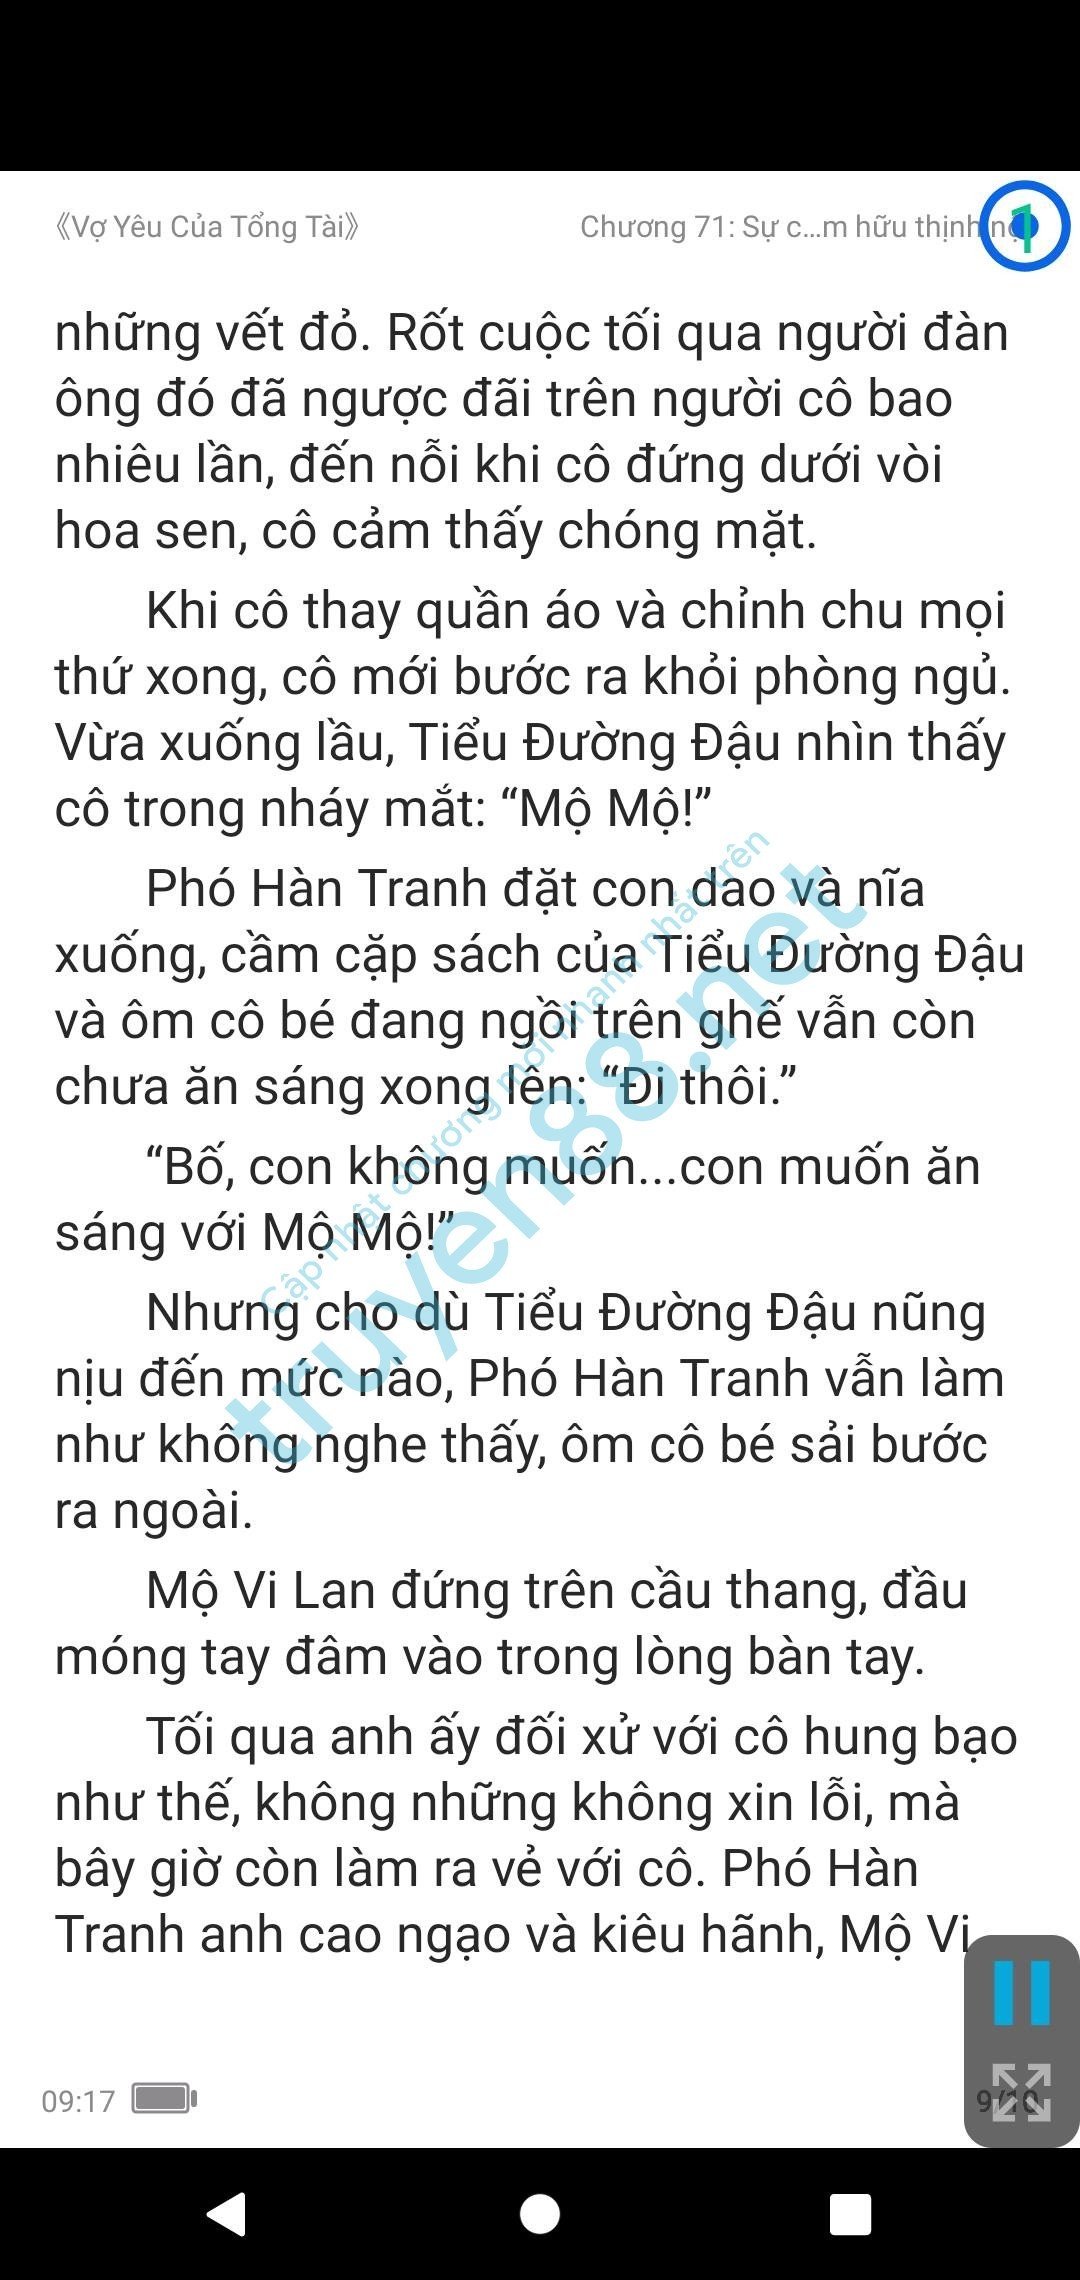 vo-yeu-cua-tong-tai-mo-vi-lan--pho-han-tranh-71-1